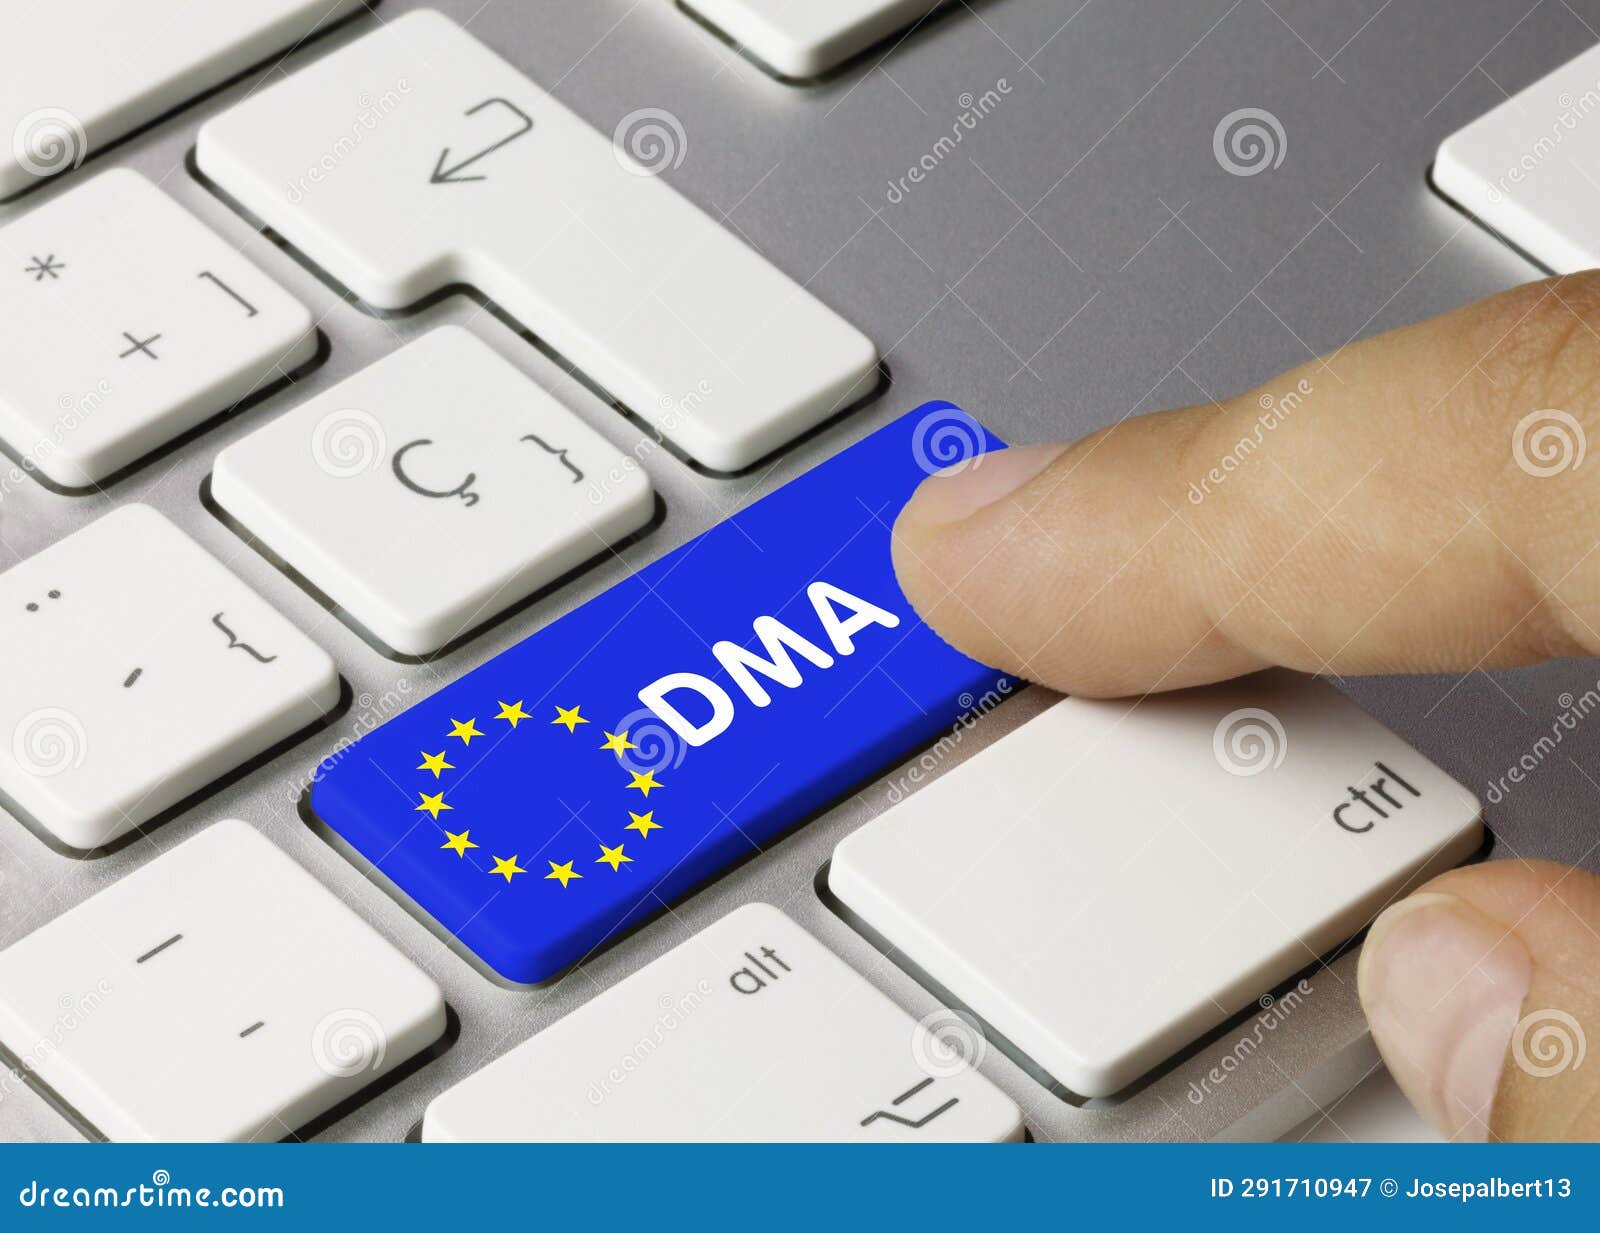 dma digital markets act - inscription on blue keyboard key